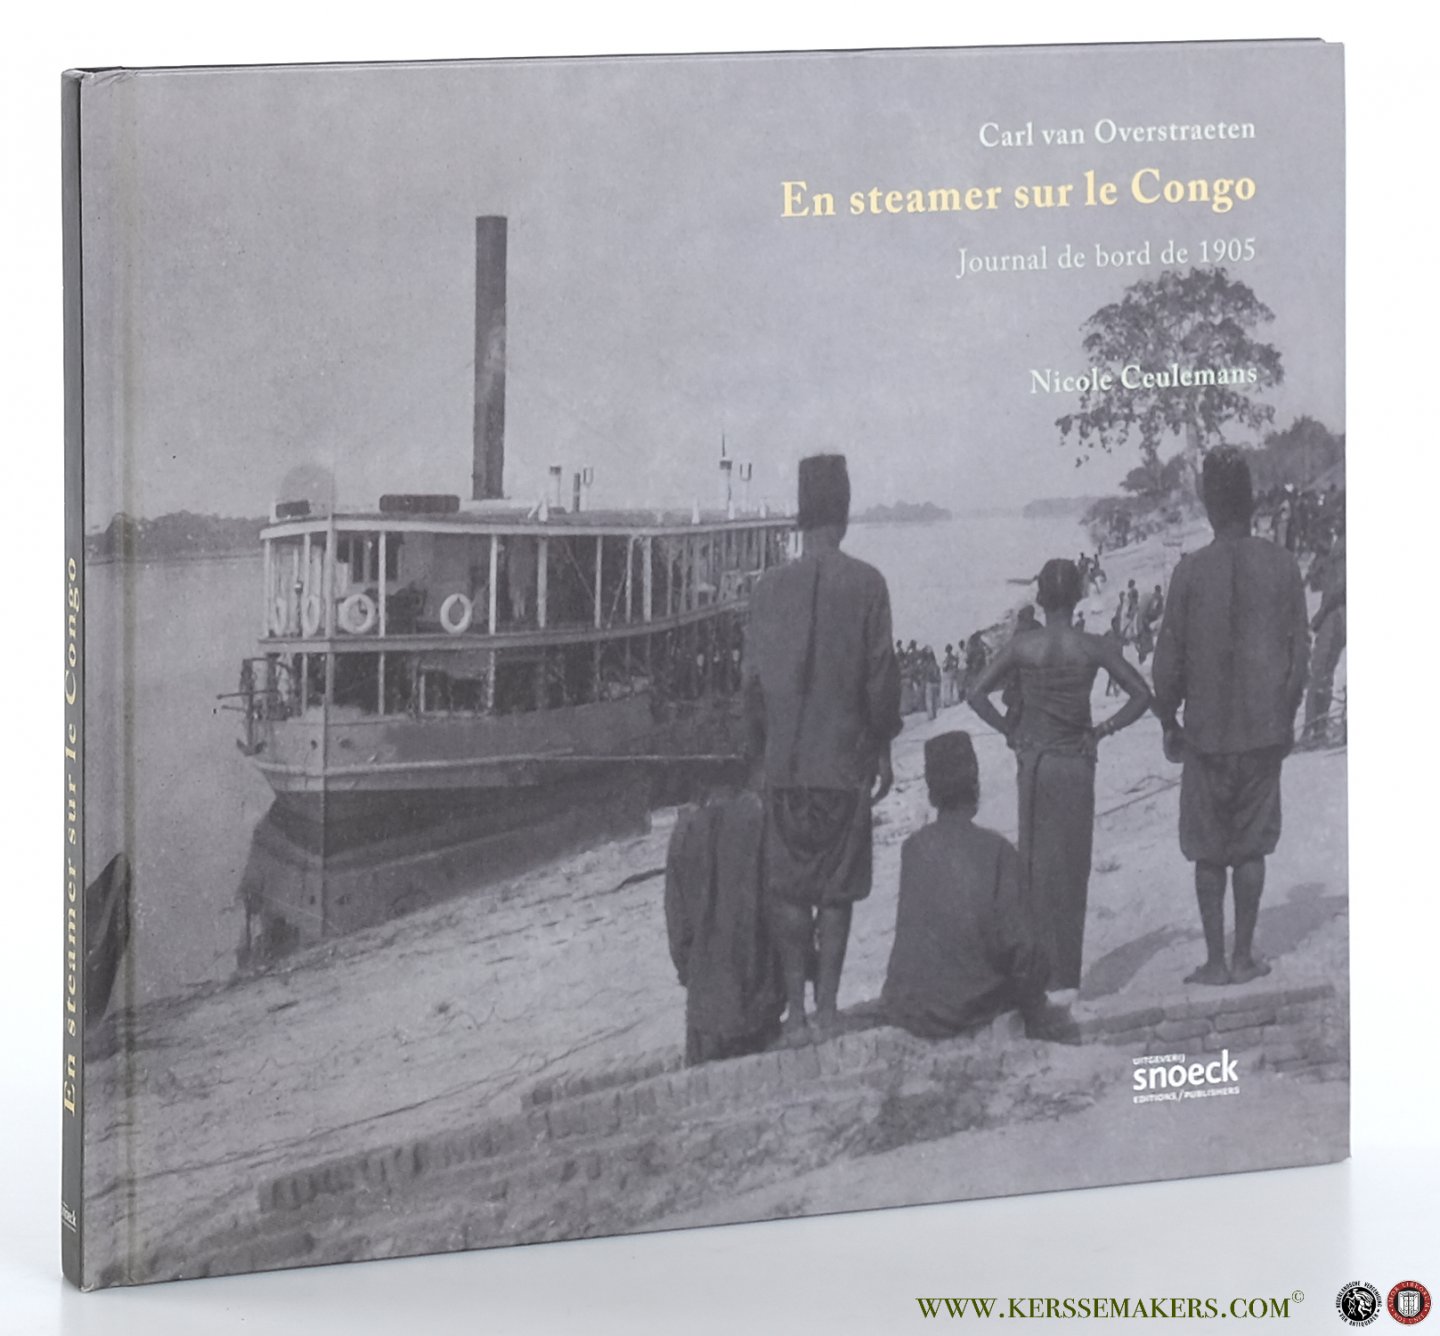 Overstraeten, Carl van / Nicole Ceulemans. - Carl van Overstraeten. En steamer sur le Congo. Journal de bord de 1905. Avec la collaboration de Fabrice Biasino.